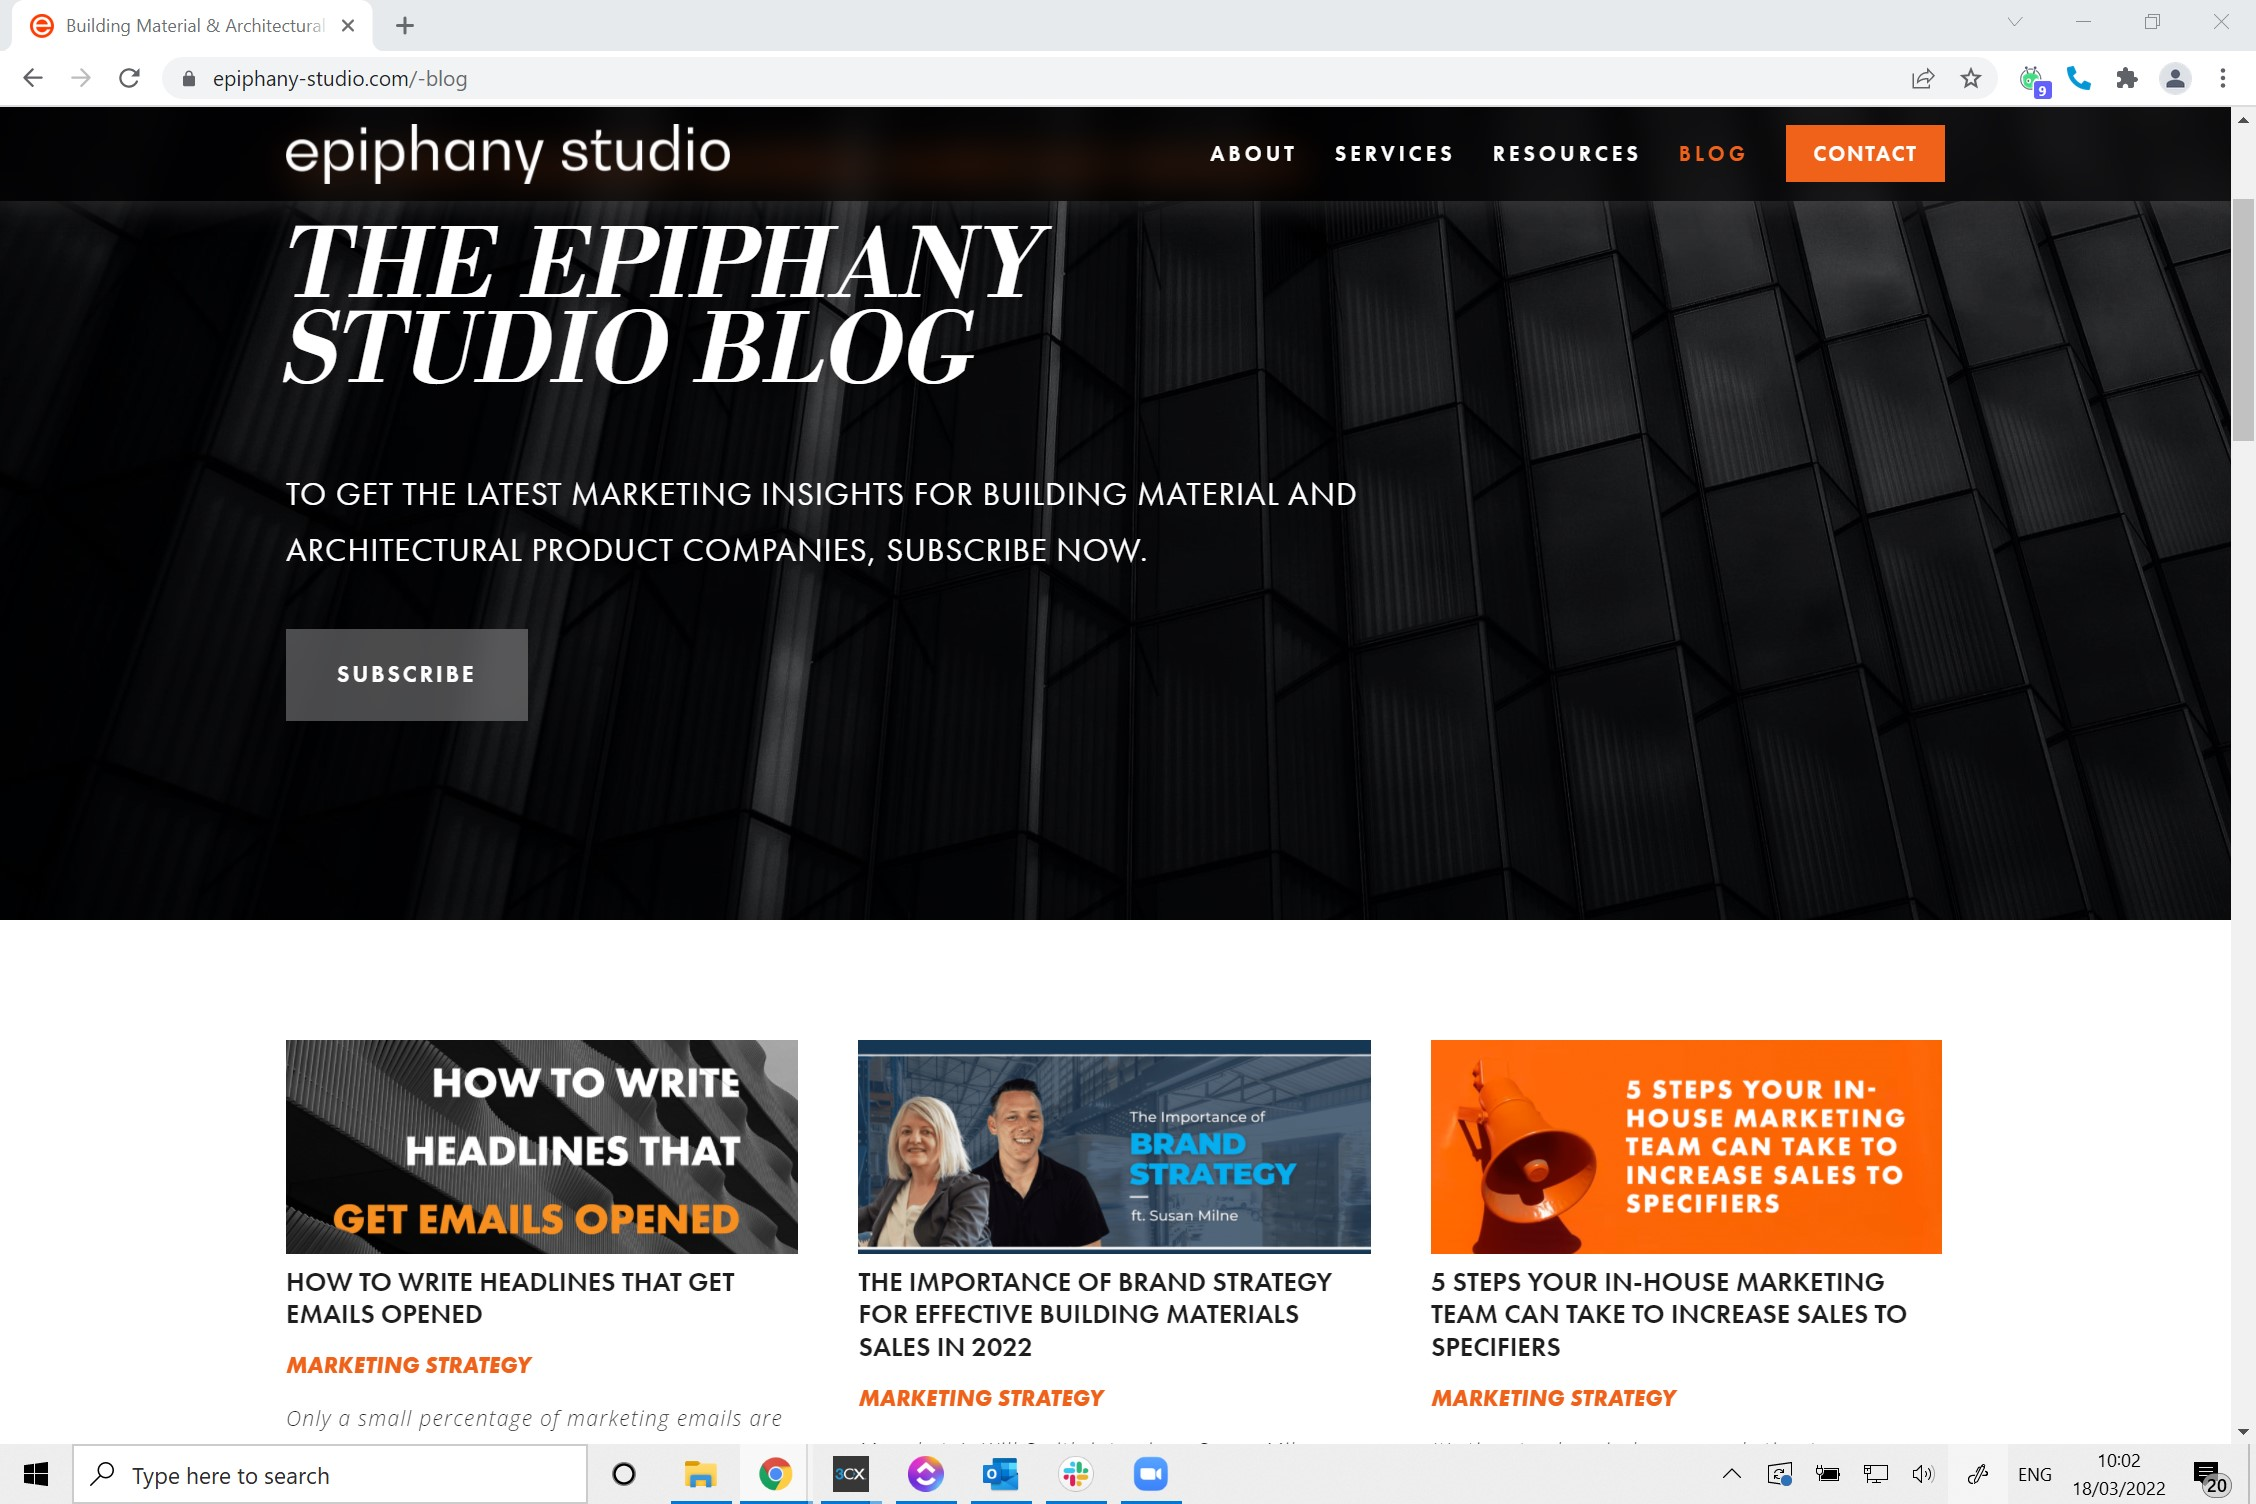 epiphany studio homepage screen shot